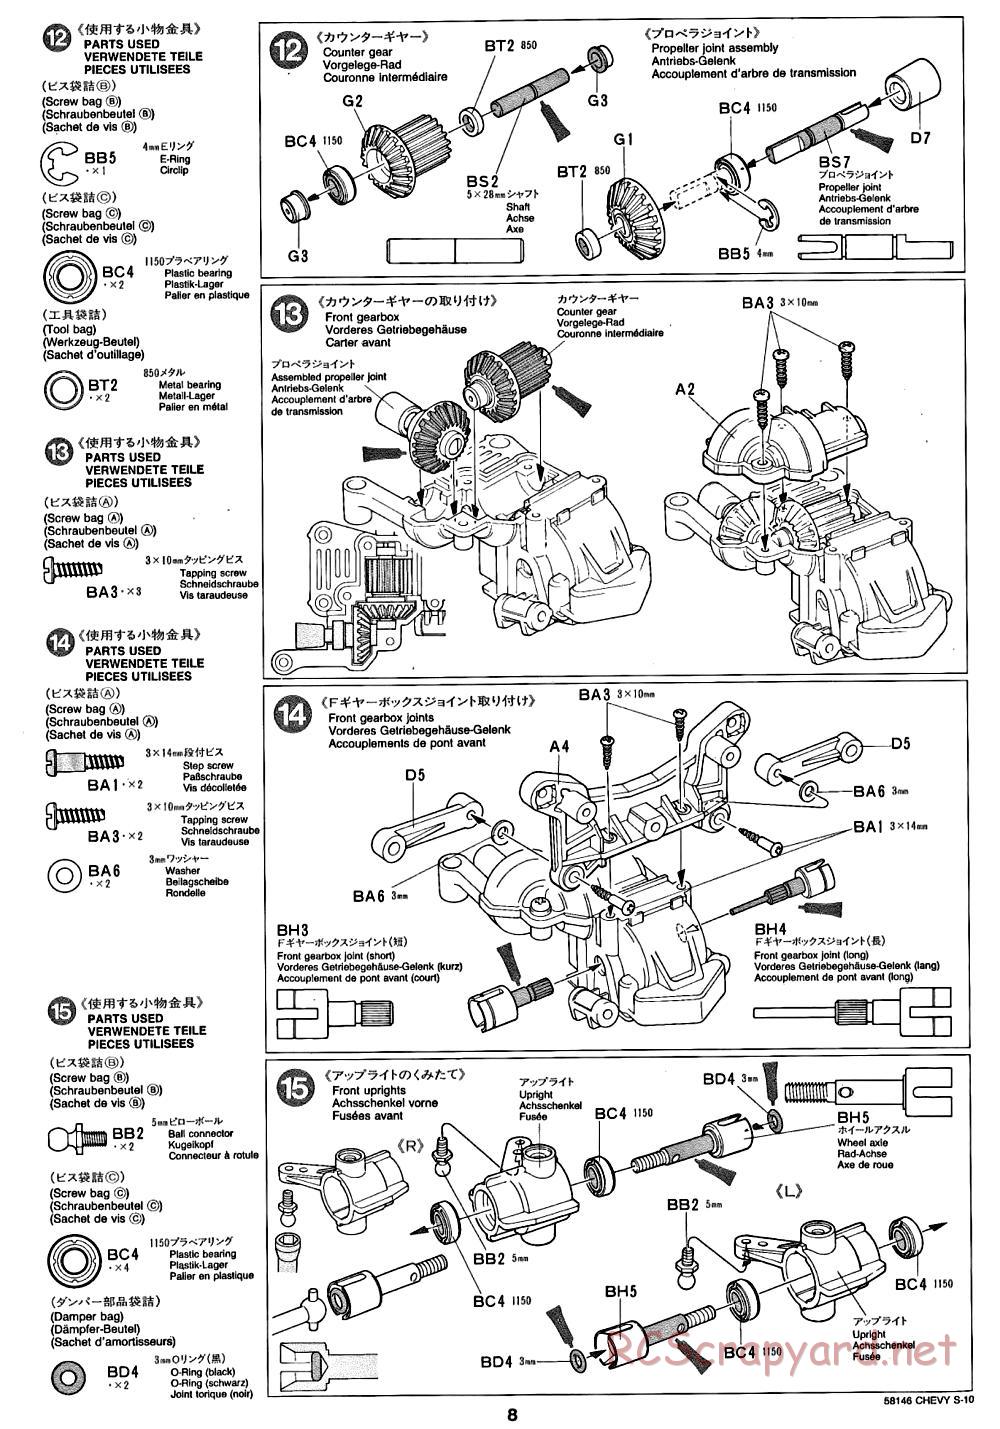 Tamiya - Chevy S-10 Chassis - Manual - Page 8